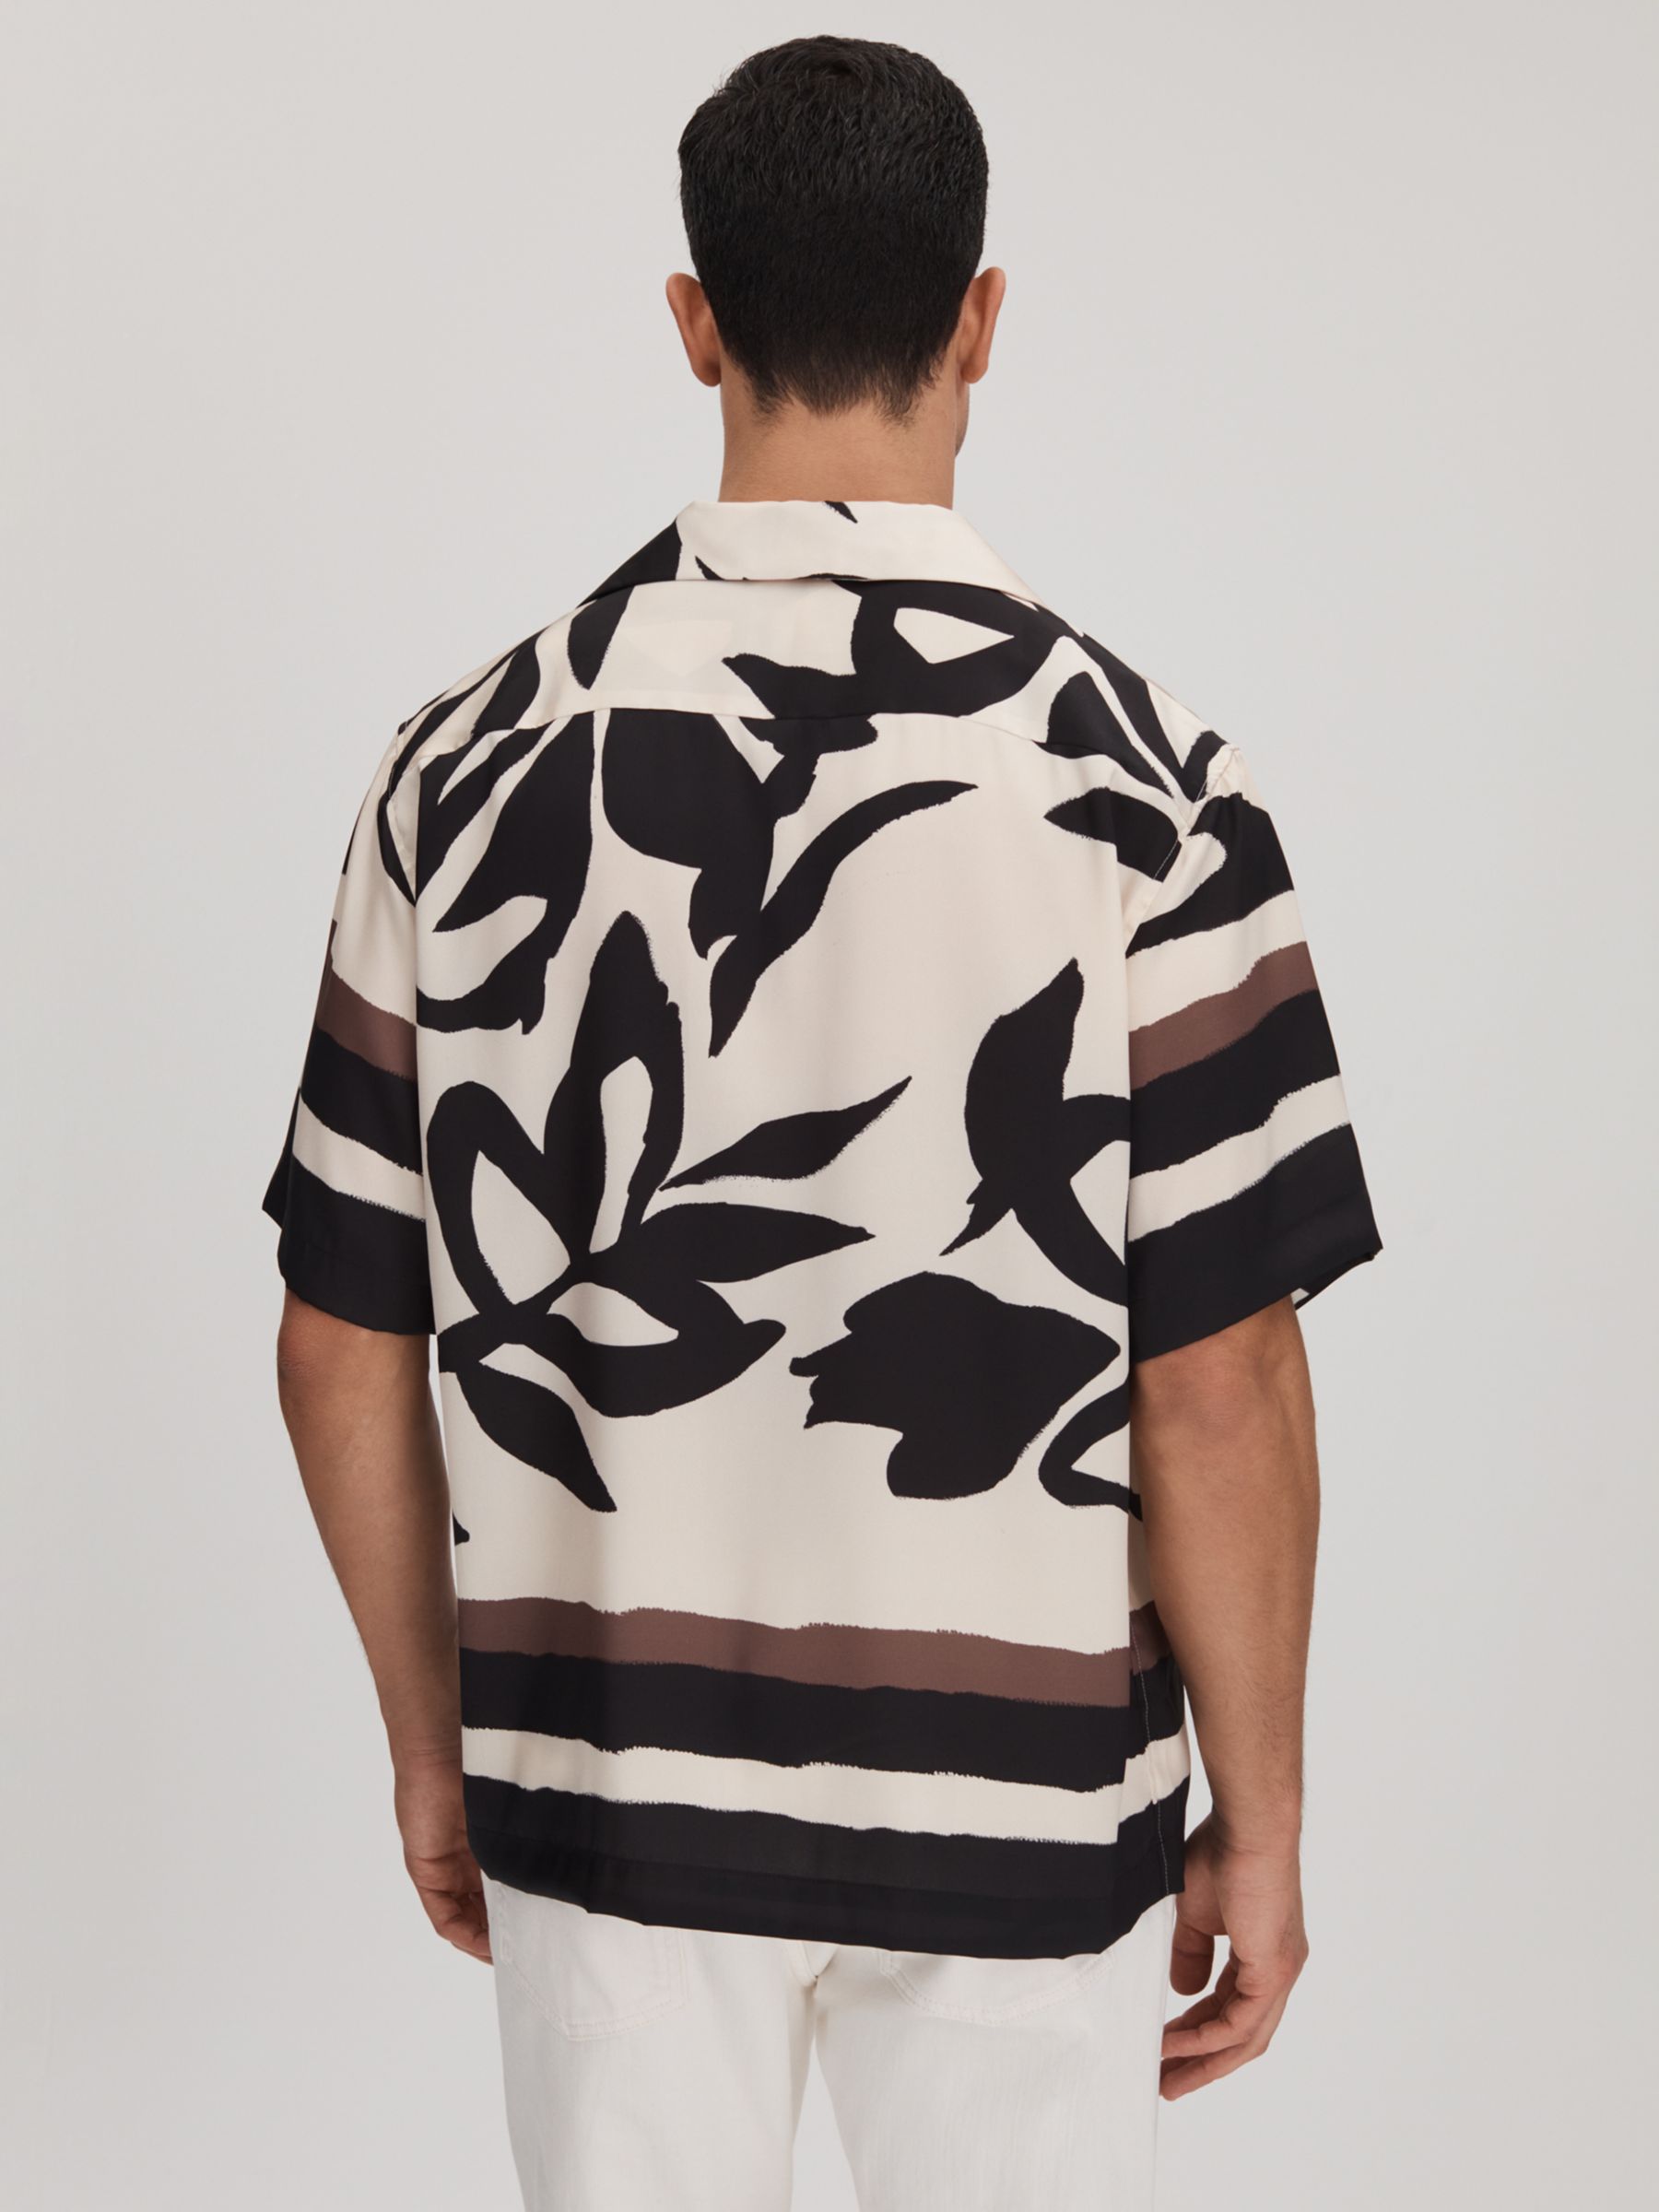 Reiss Croft Leaf Print Casual Shirt, Black/Ecru, XS